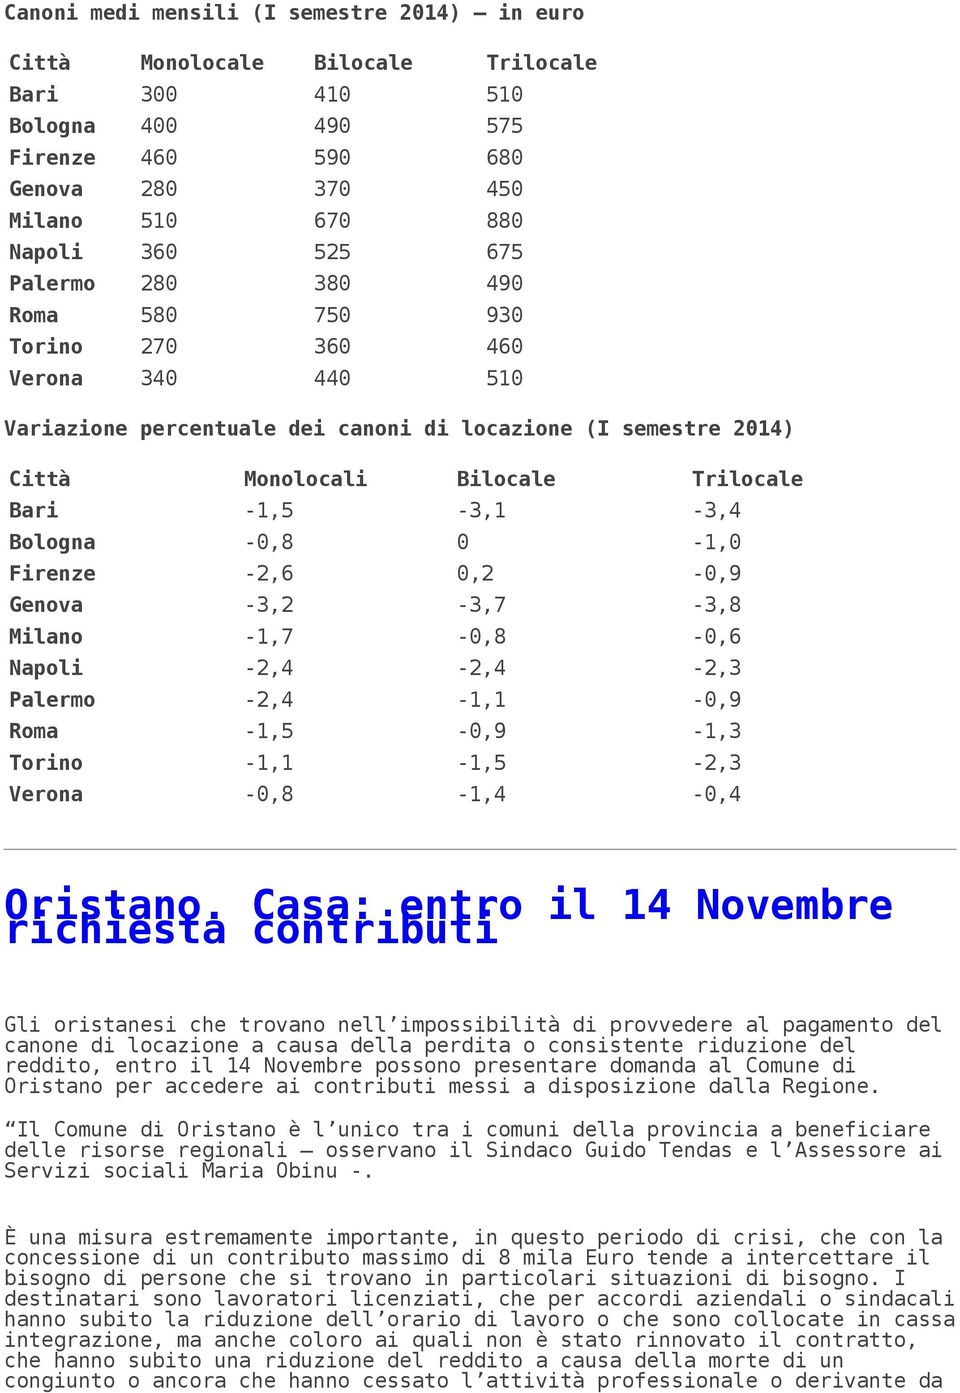 Bologna -0,8 0-1,0 Firenze -2,6 0,2-0,9 Genova -3,2-3,7-3,8 Milano -1,7-0,8-0,6 Napoli -2,4-2,4-2,3 Palermo -2,4-1,1-0,9 Roma -1,5-0,9-1,3 Torino -1,1-1,5-2,3 Verona -0,8-1,4-0,4 Oristano.